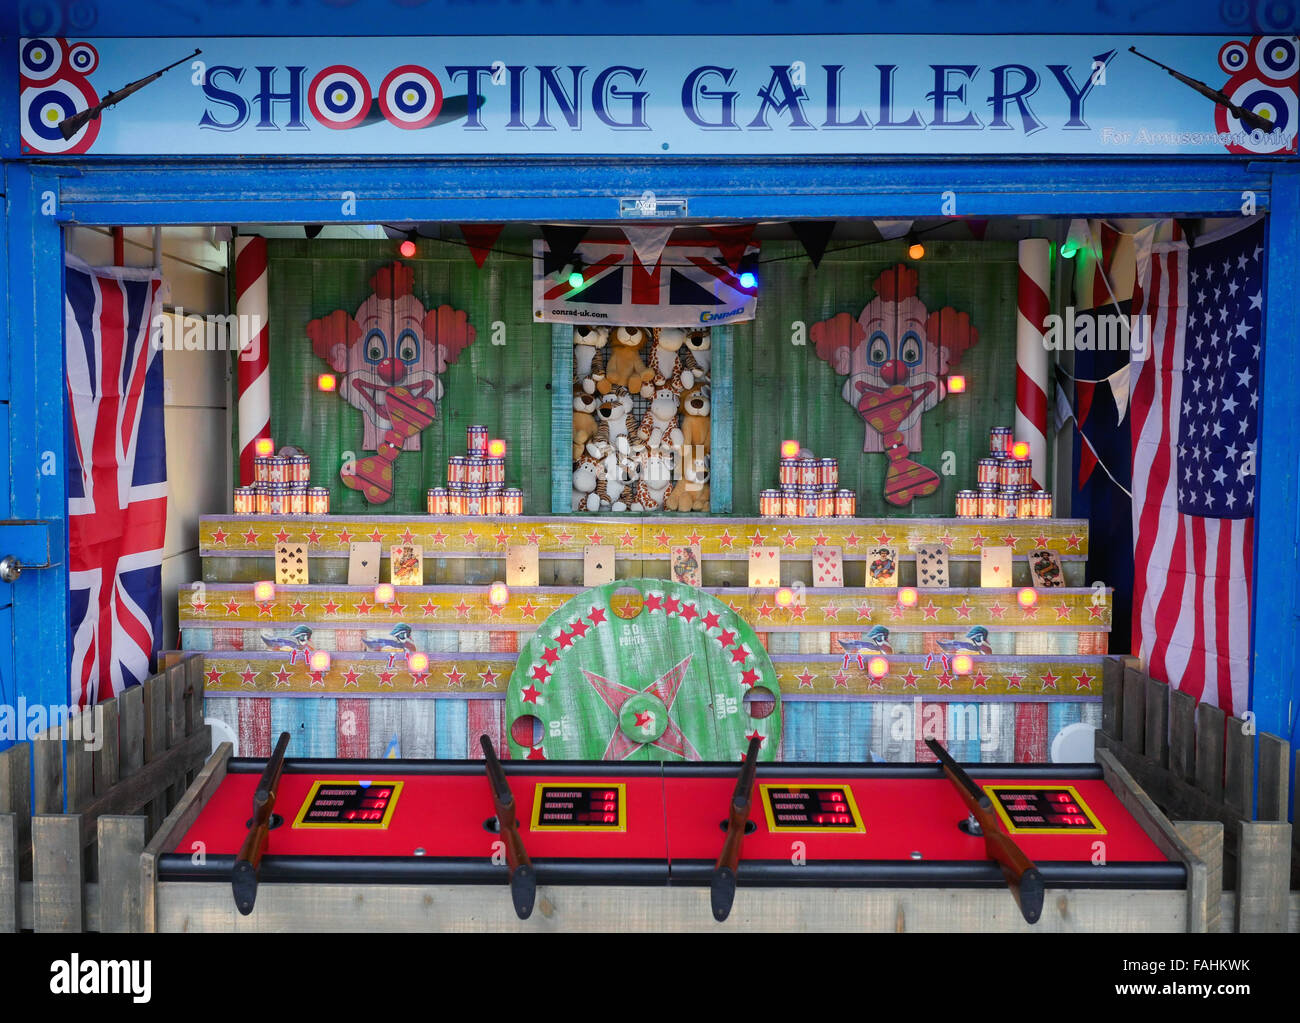 shooting-gallery-at-fairground-FAHKWK.jp